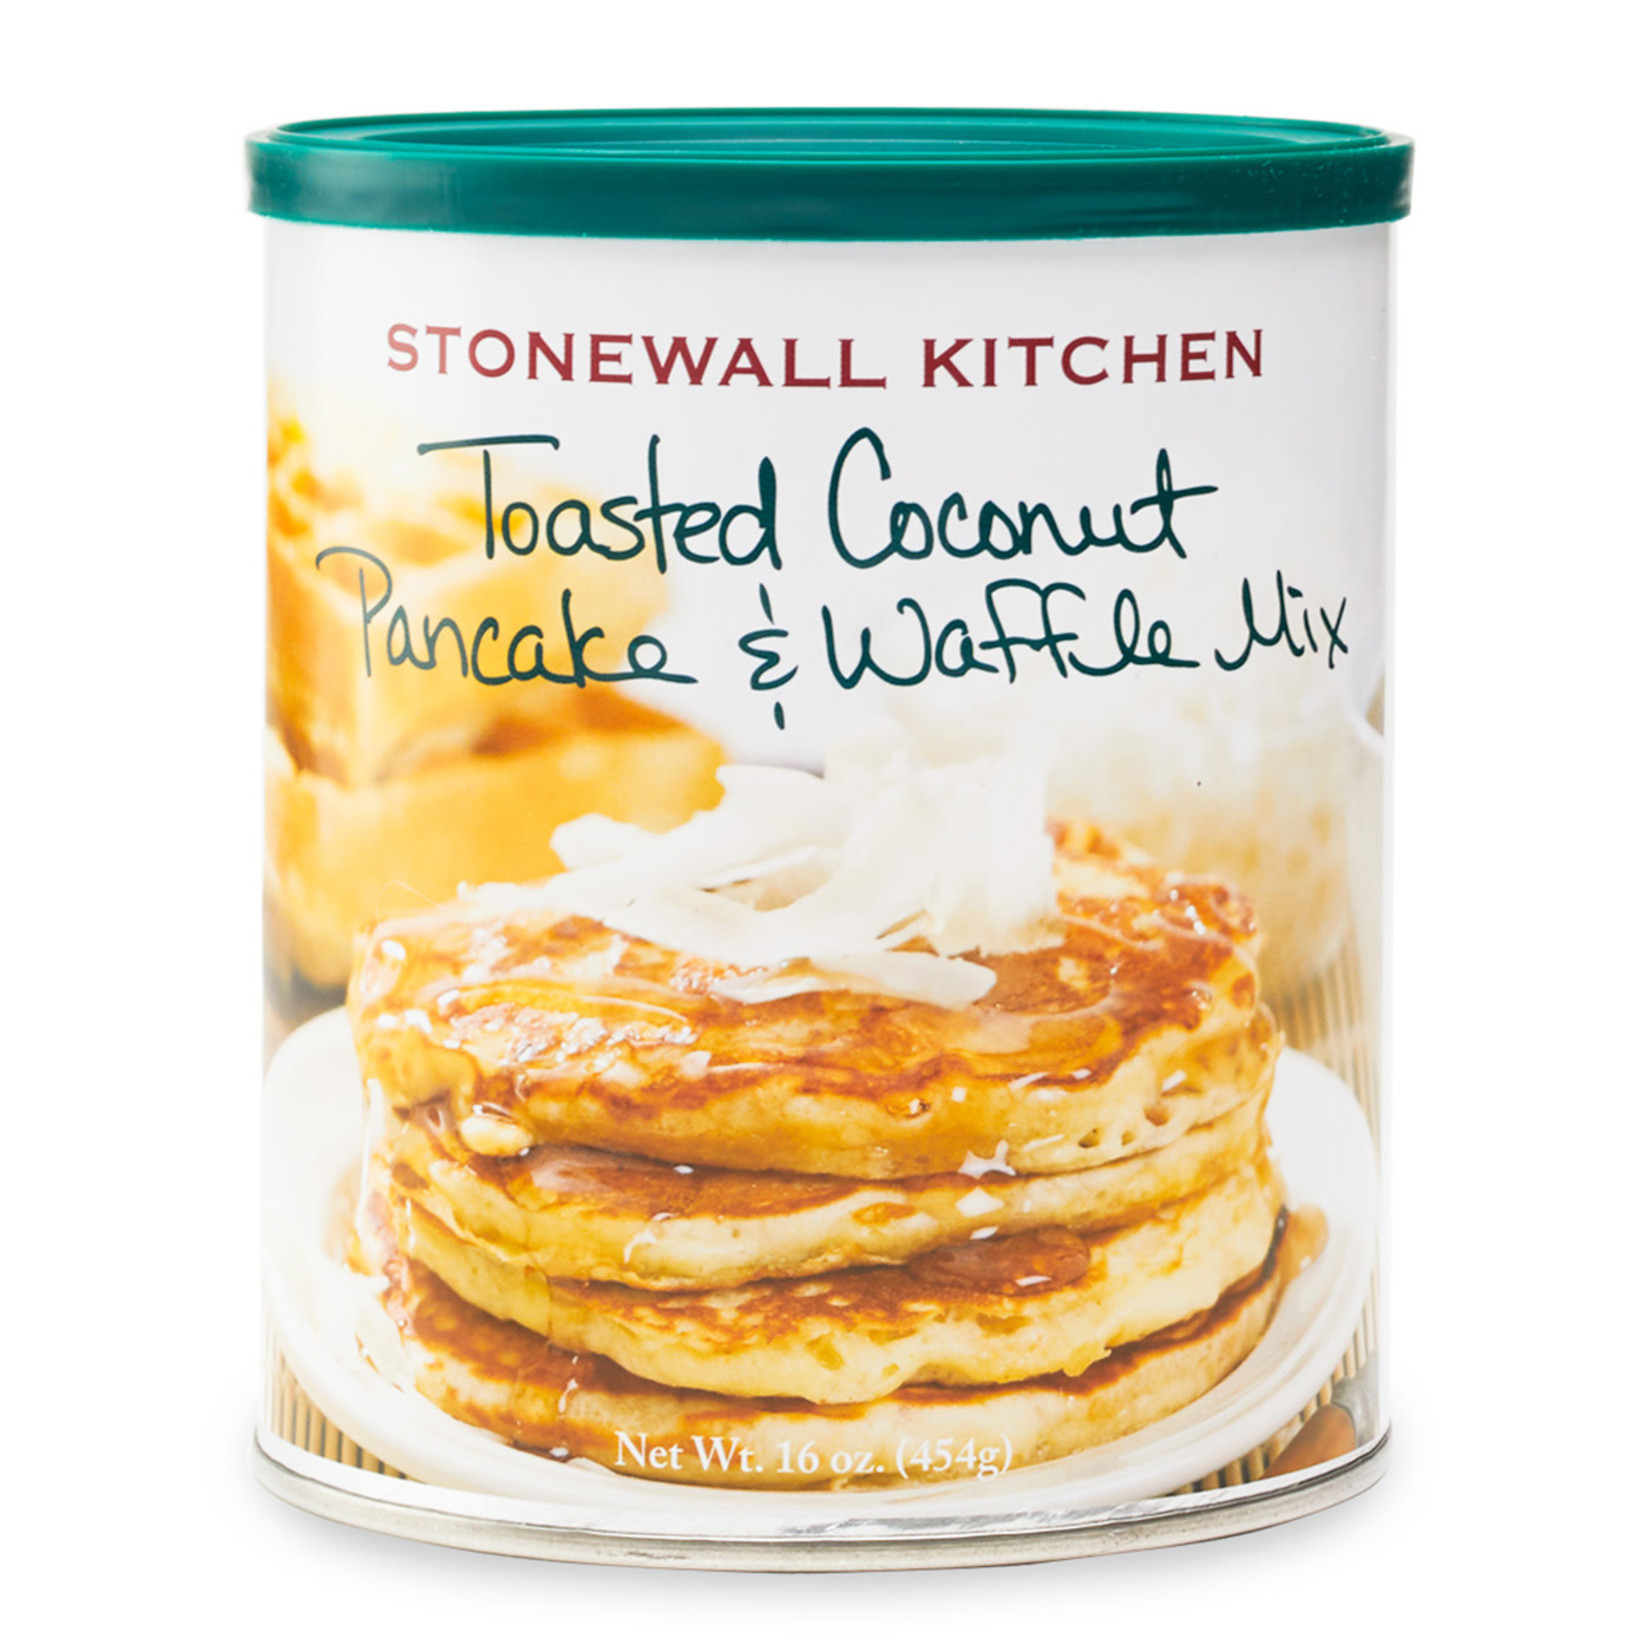 Stonewall Kitchen Toasted Coconut Pancake & Waffle Mix, 16 oz Can